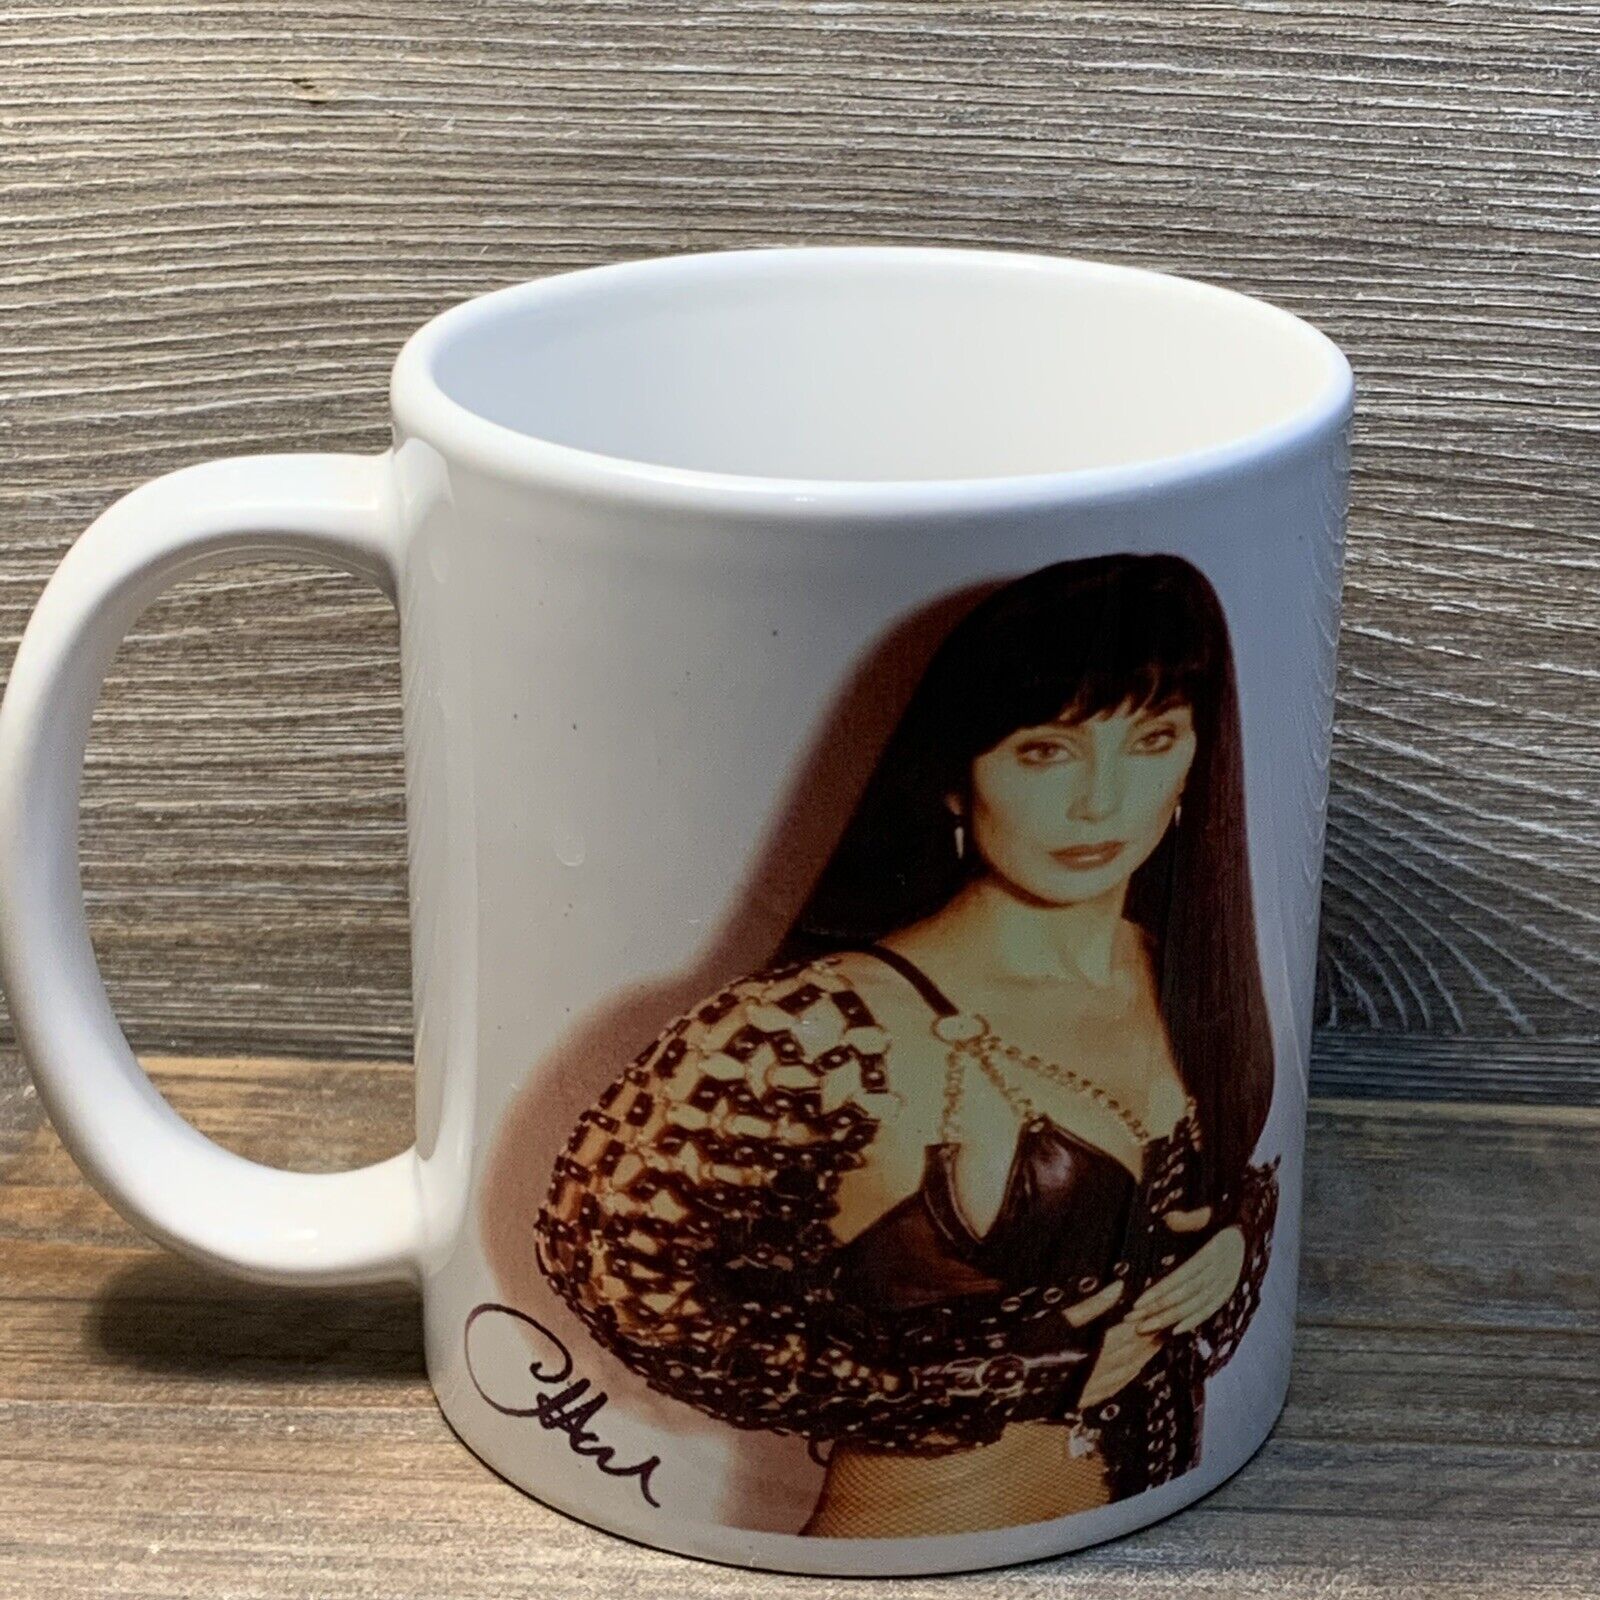 Cher Orca Coatings Ceramic Glass Coffee Tea Mug Cup Used (Made In China) (White)